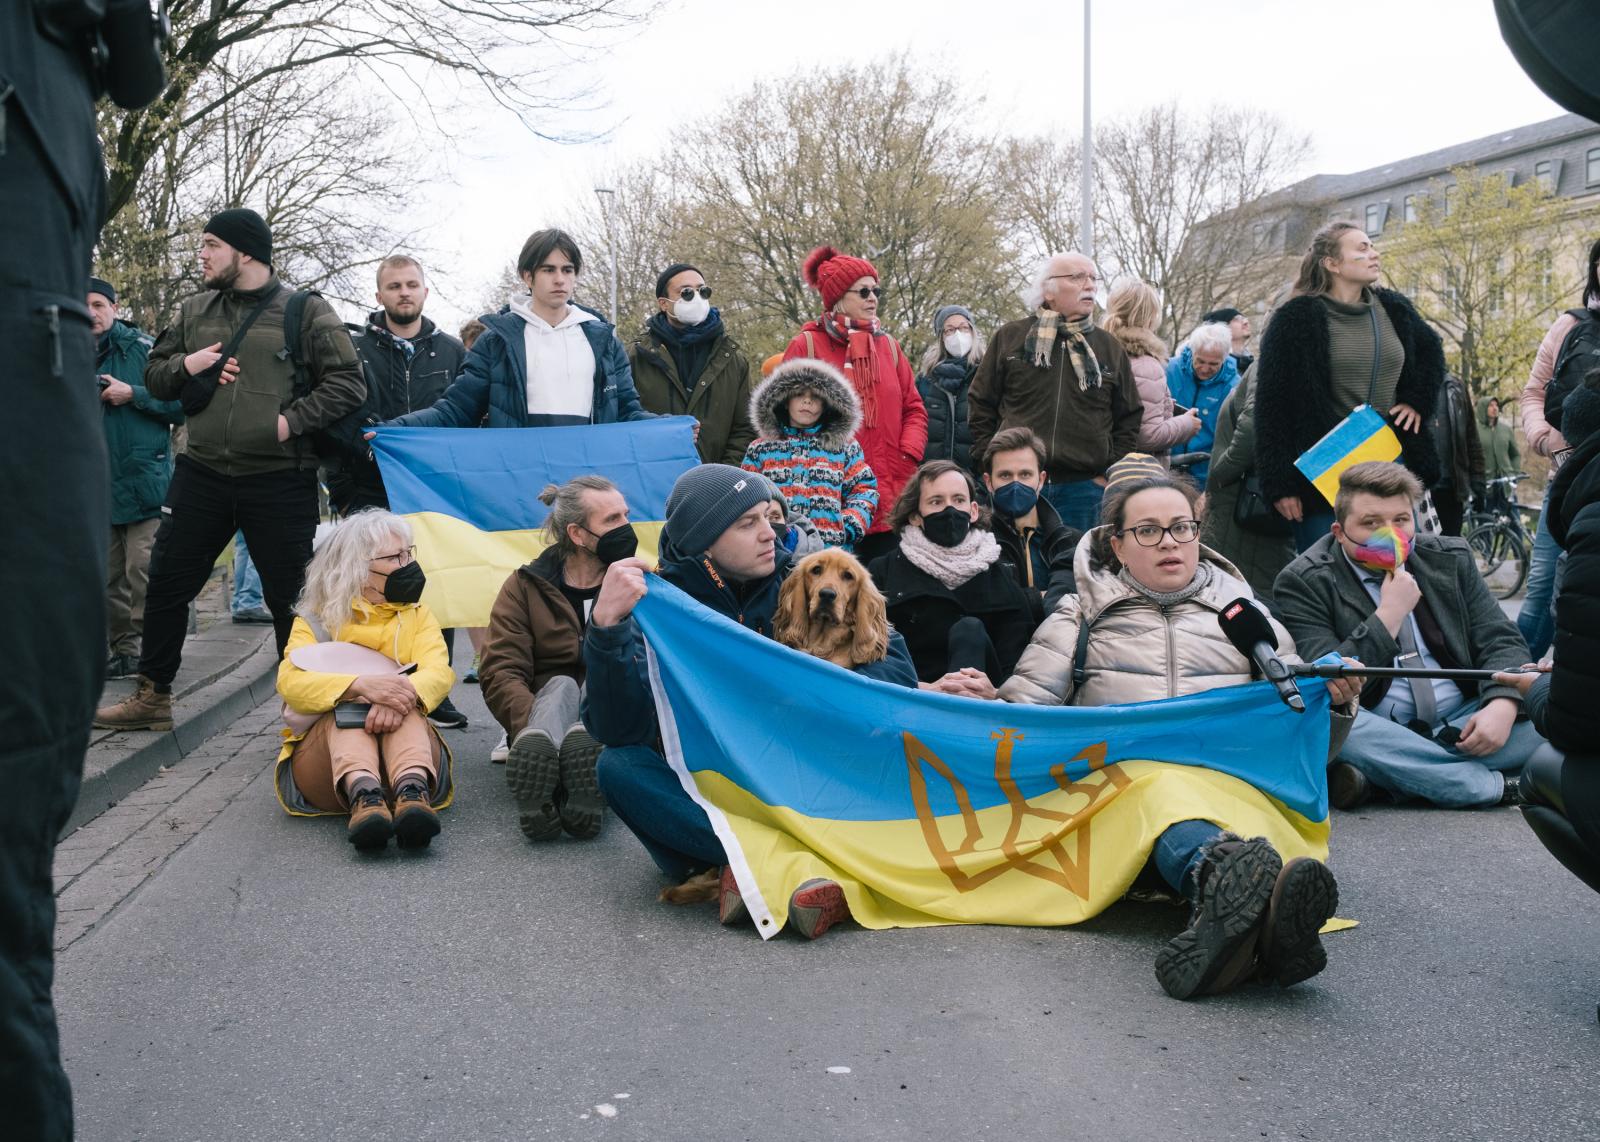 Russian Motorcade in Hanover Blocked - Protesters block motorcade with Ukranian flags.